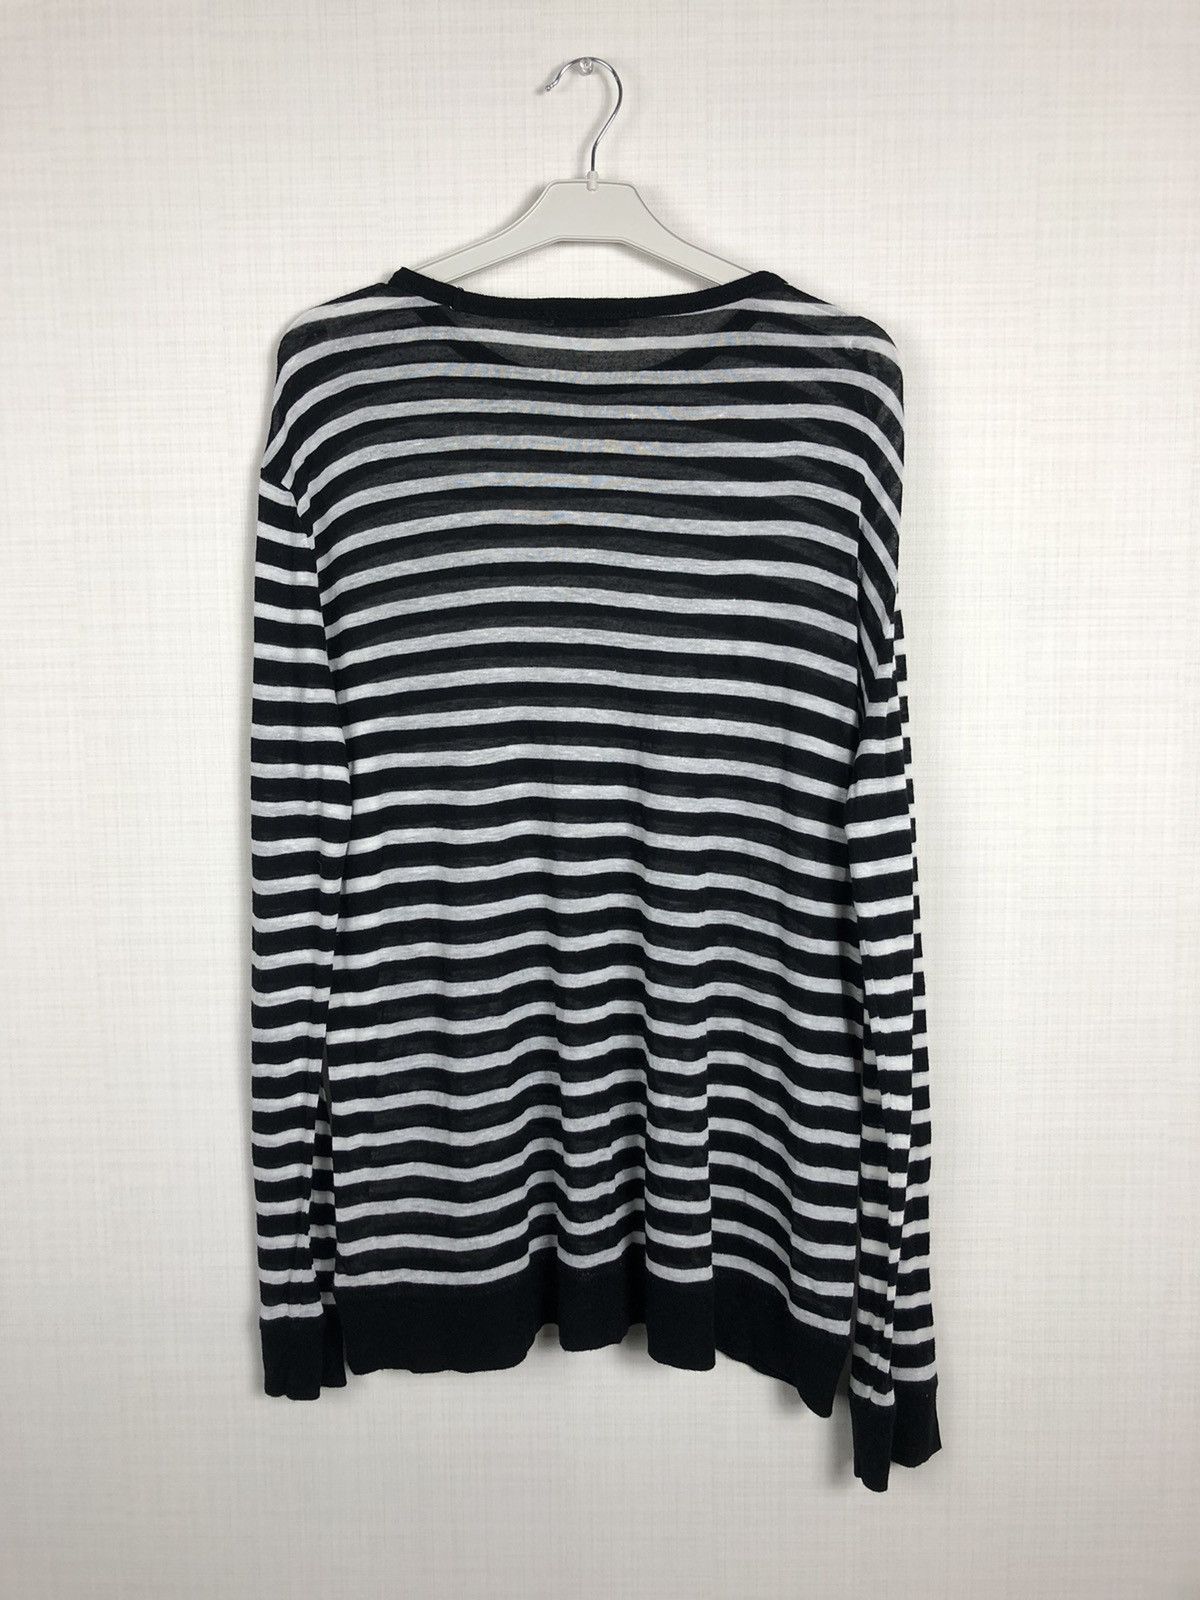 Rare T Alexander Wang Striped Sweater Long Sleeve ThIn Black Logo Size US M / EU 48-50 / 2 - 7 Thumbnail